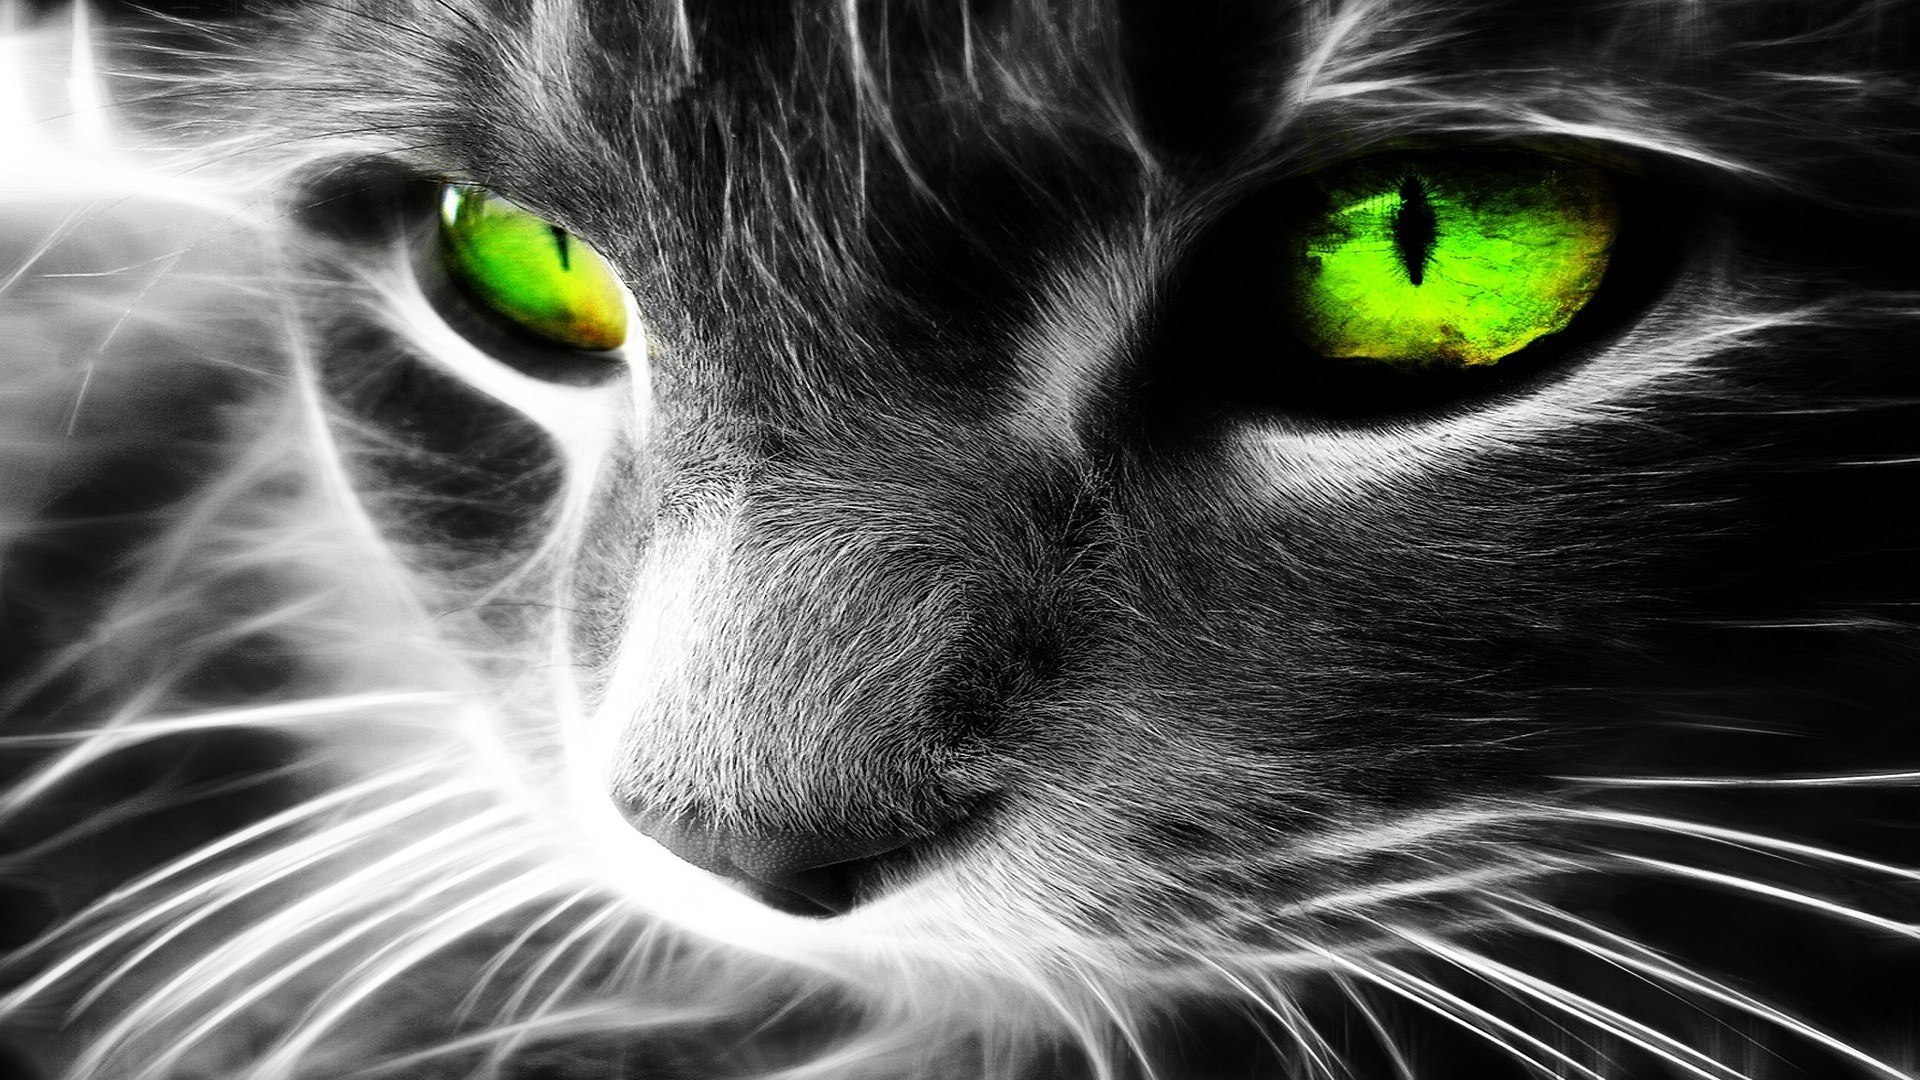 Cat with green eyes wallpaper 1920x1080 HQ WALLPAPER   37274